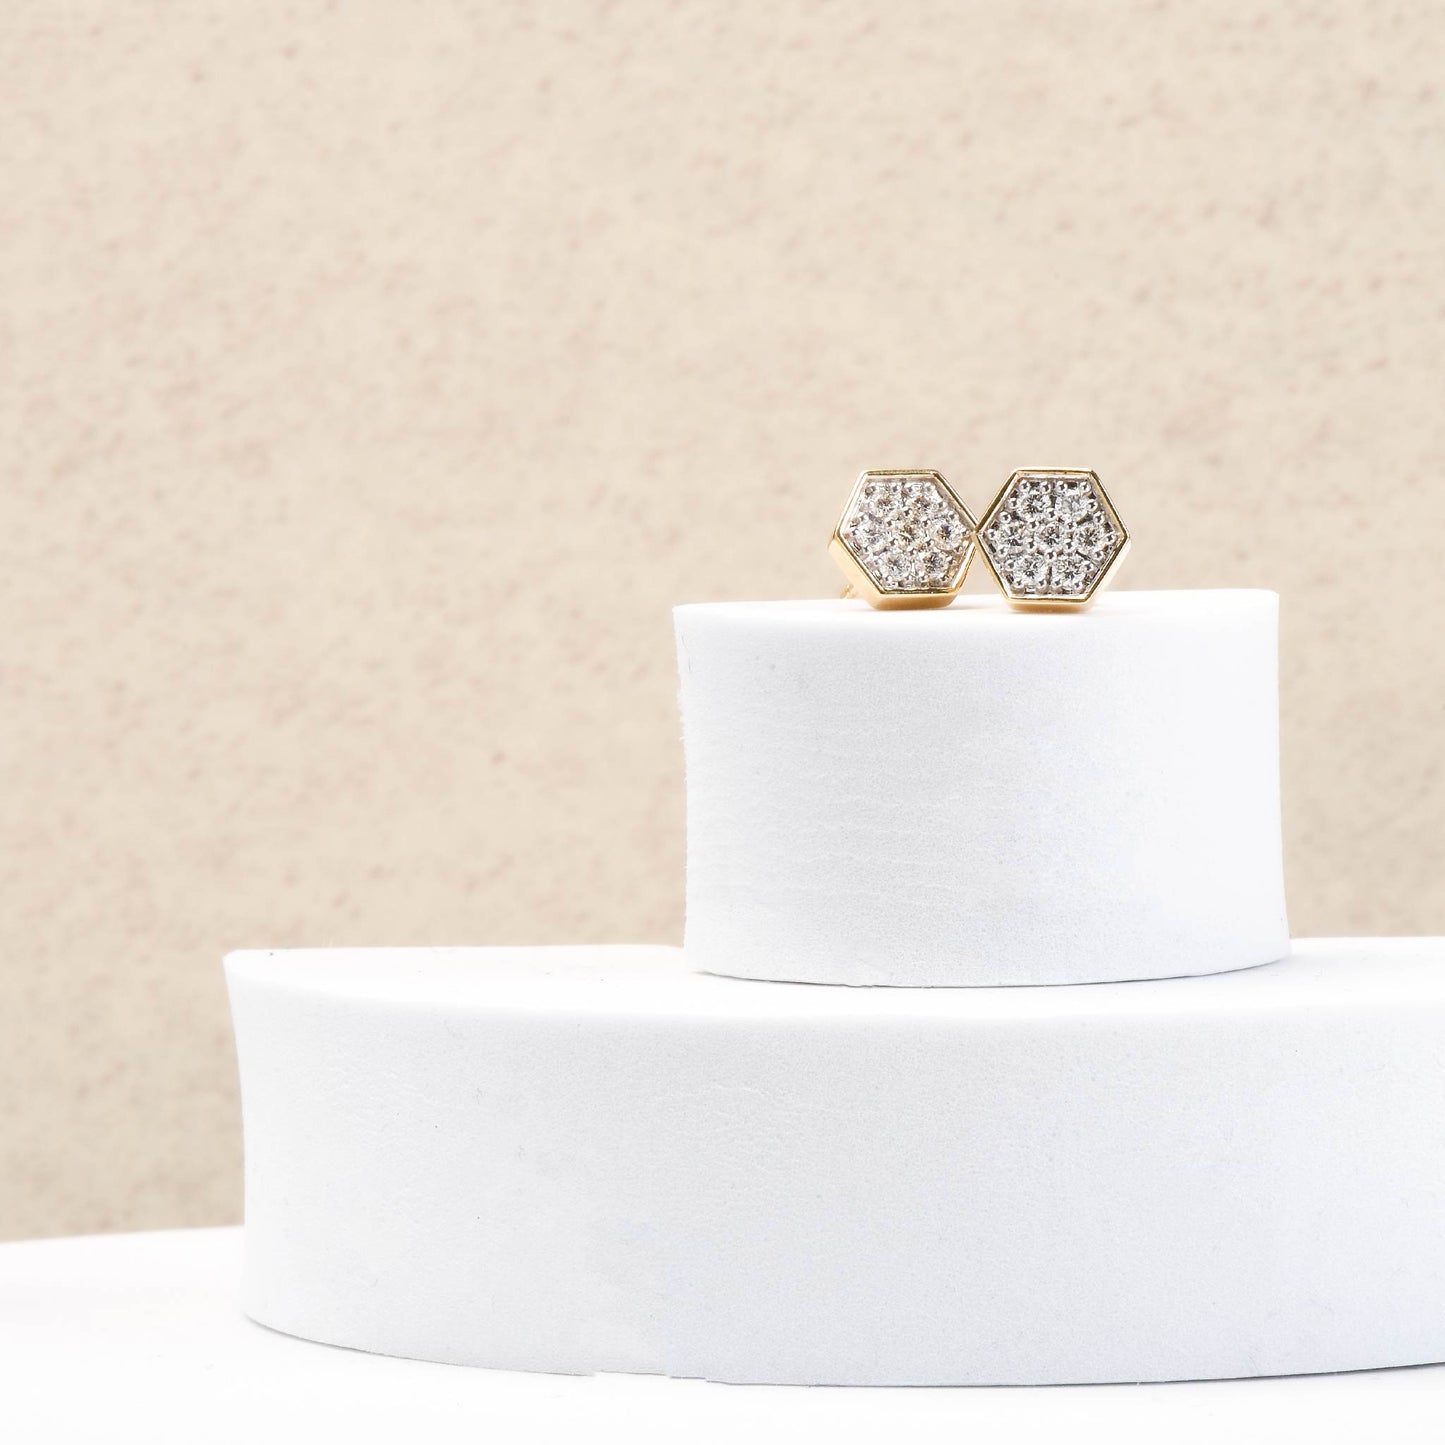 White Diamond Stud Earrings | White Sapphire Yellow Gold Hexagon Studs